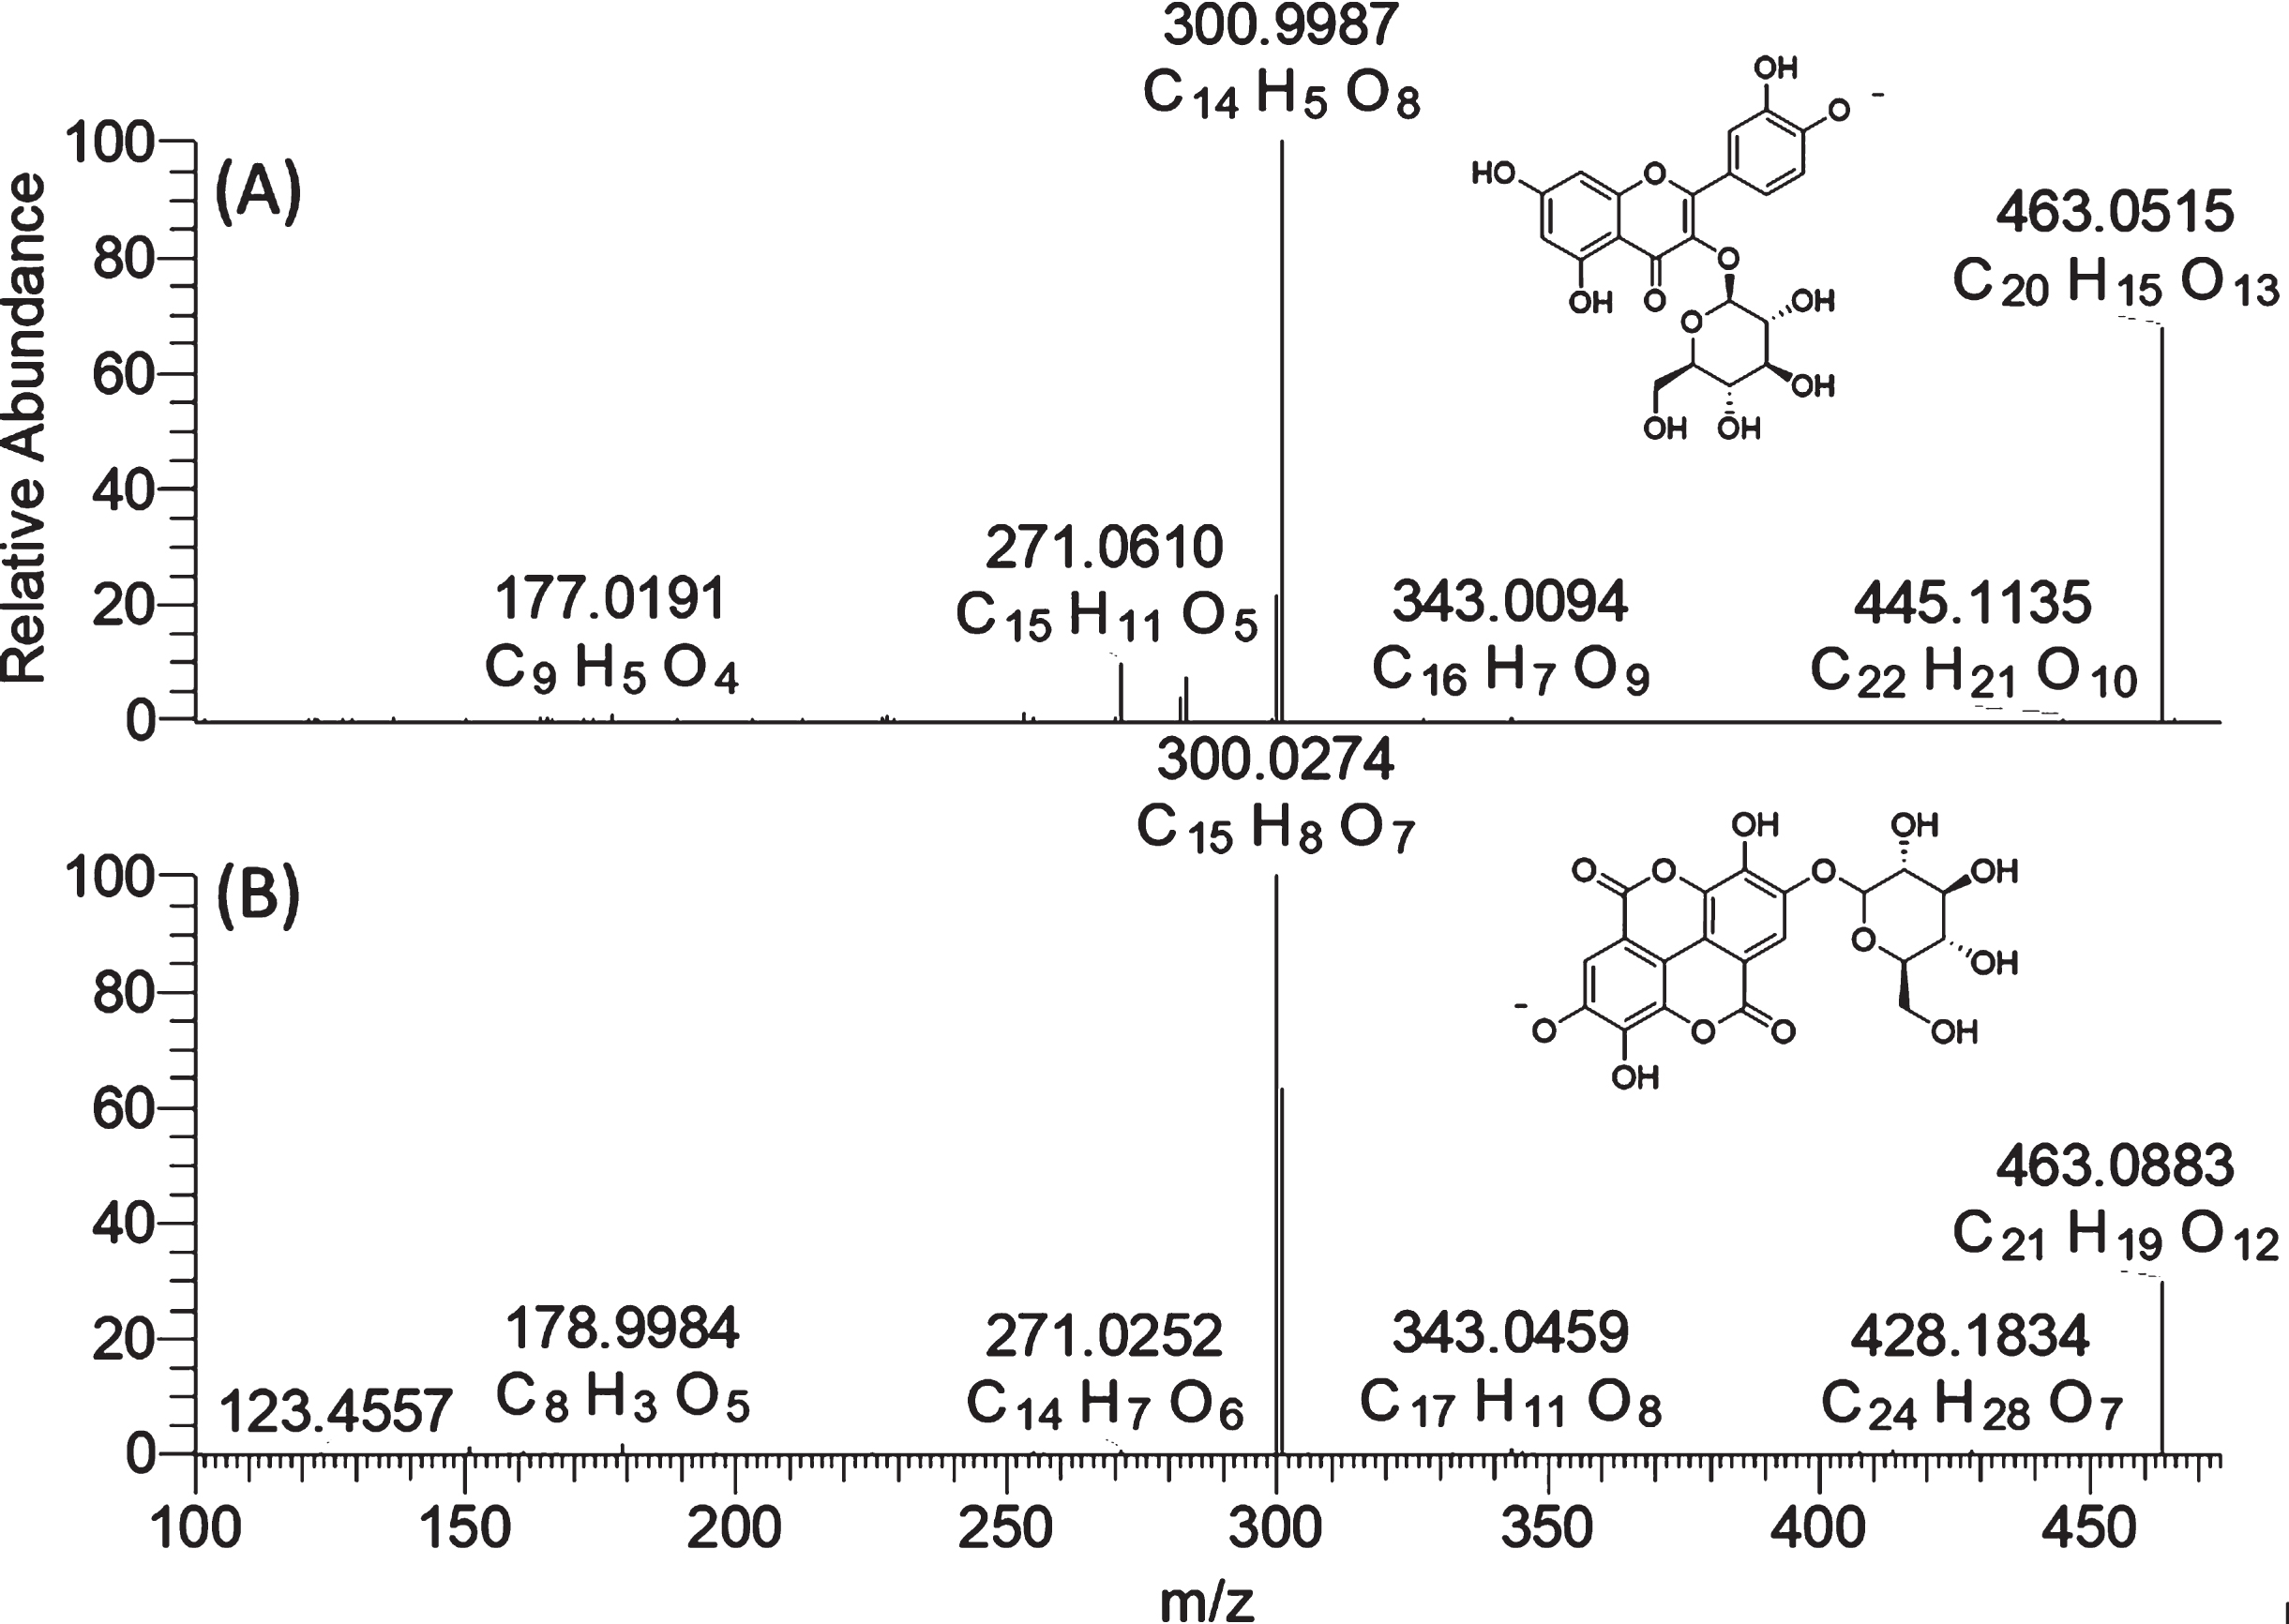 High-resolution mass spectra (MS2) of quercetin-3-O-glucoside (A) and ellagic acid glucoside (B).